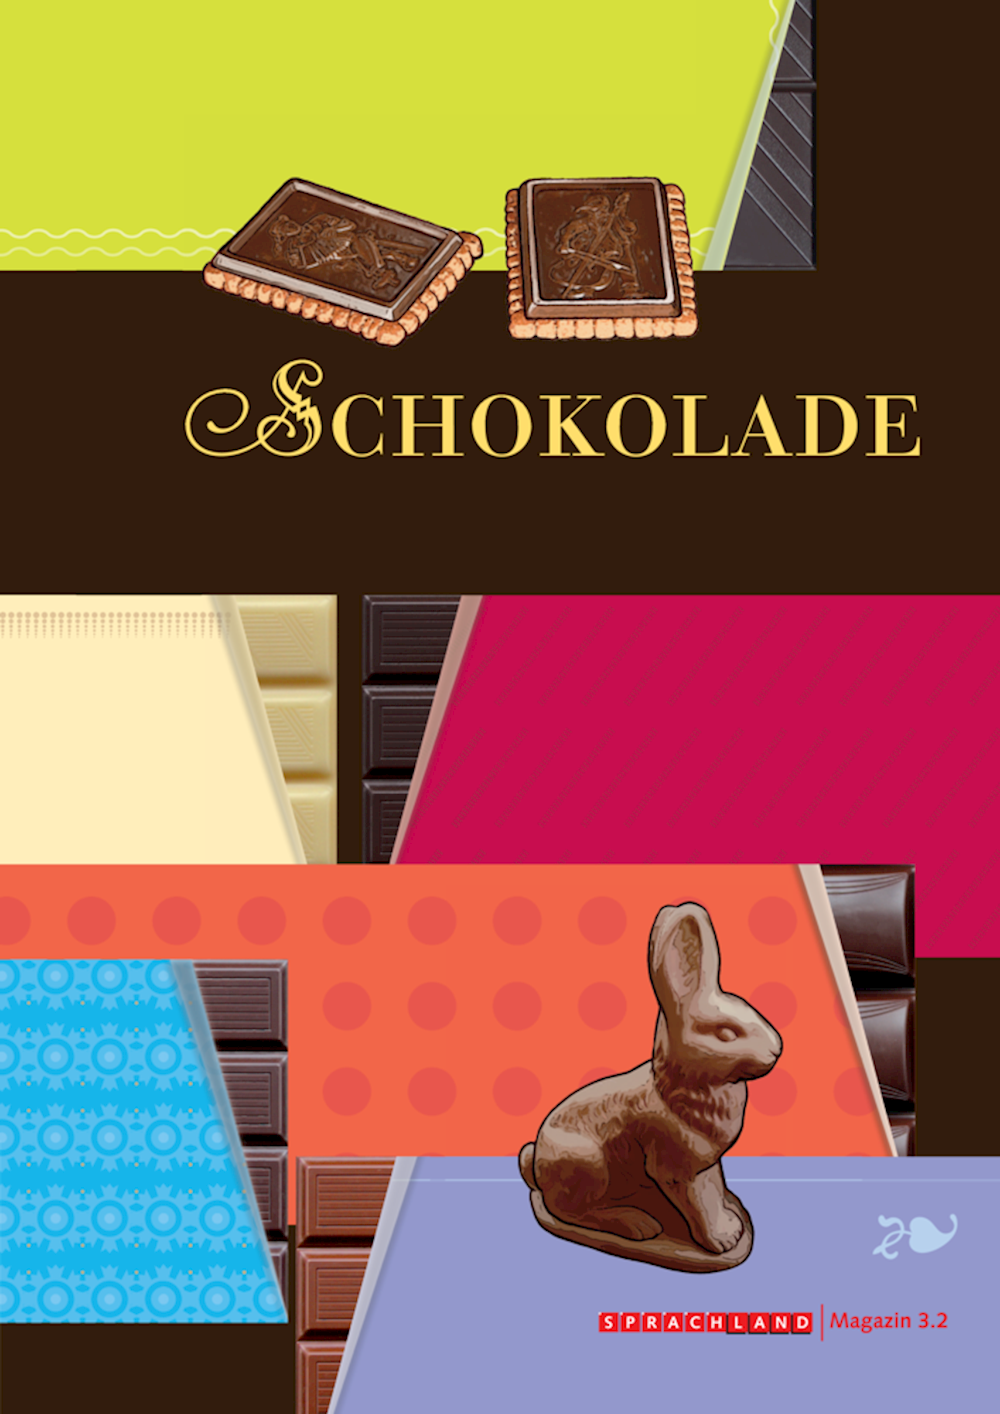 Sprachland Magazin 3.2: Schokolade